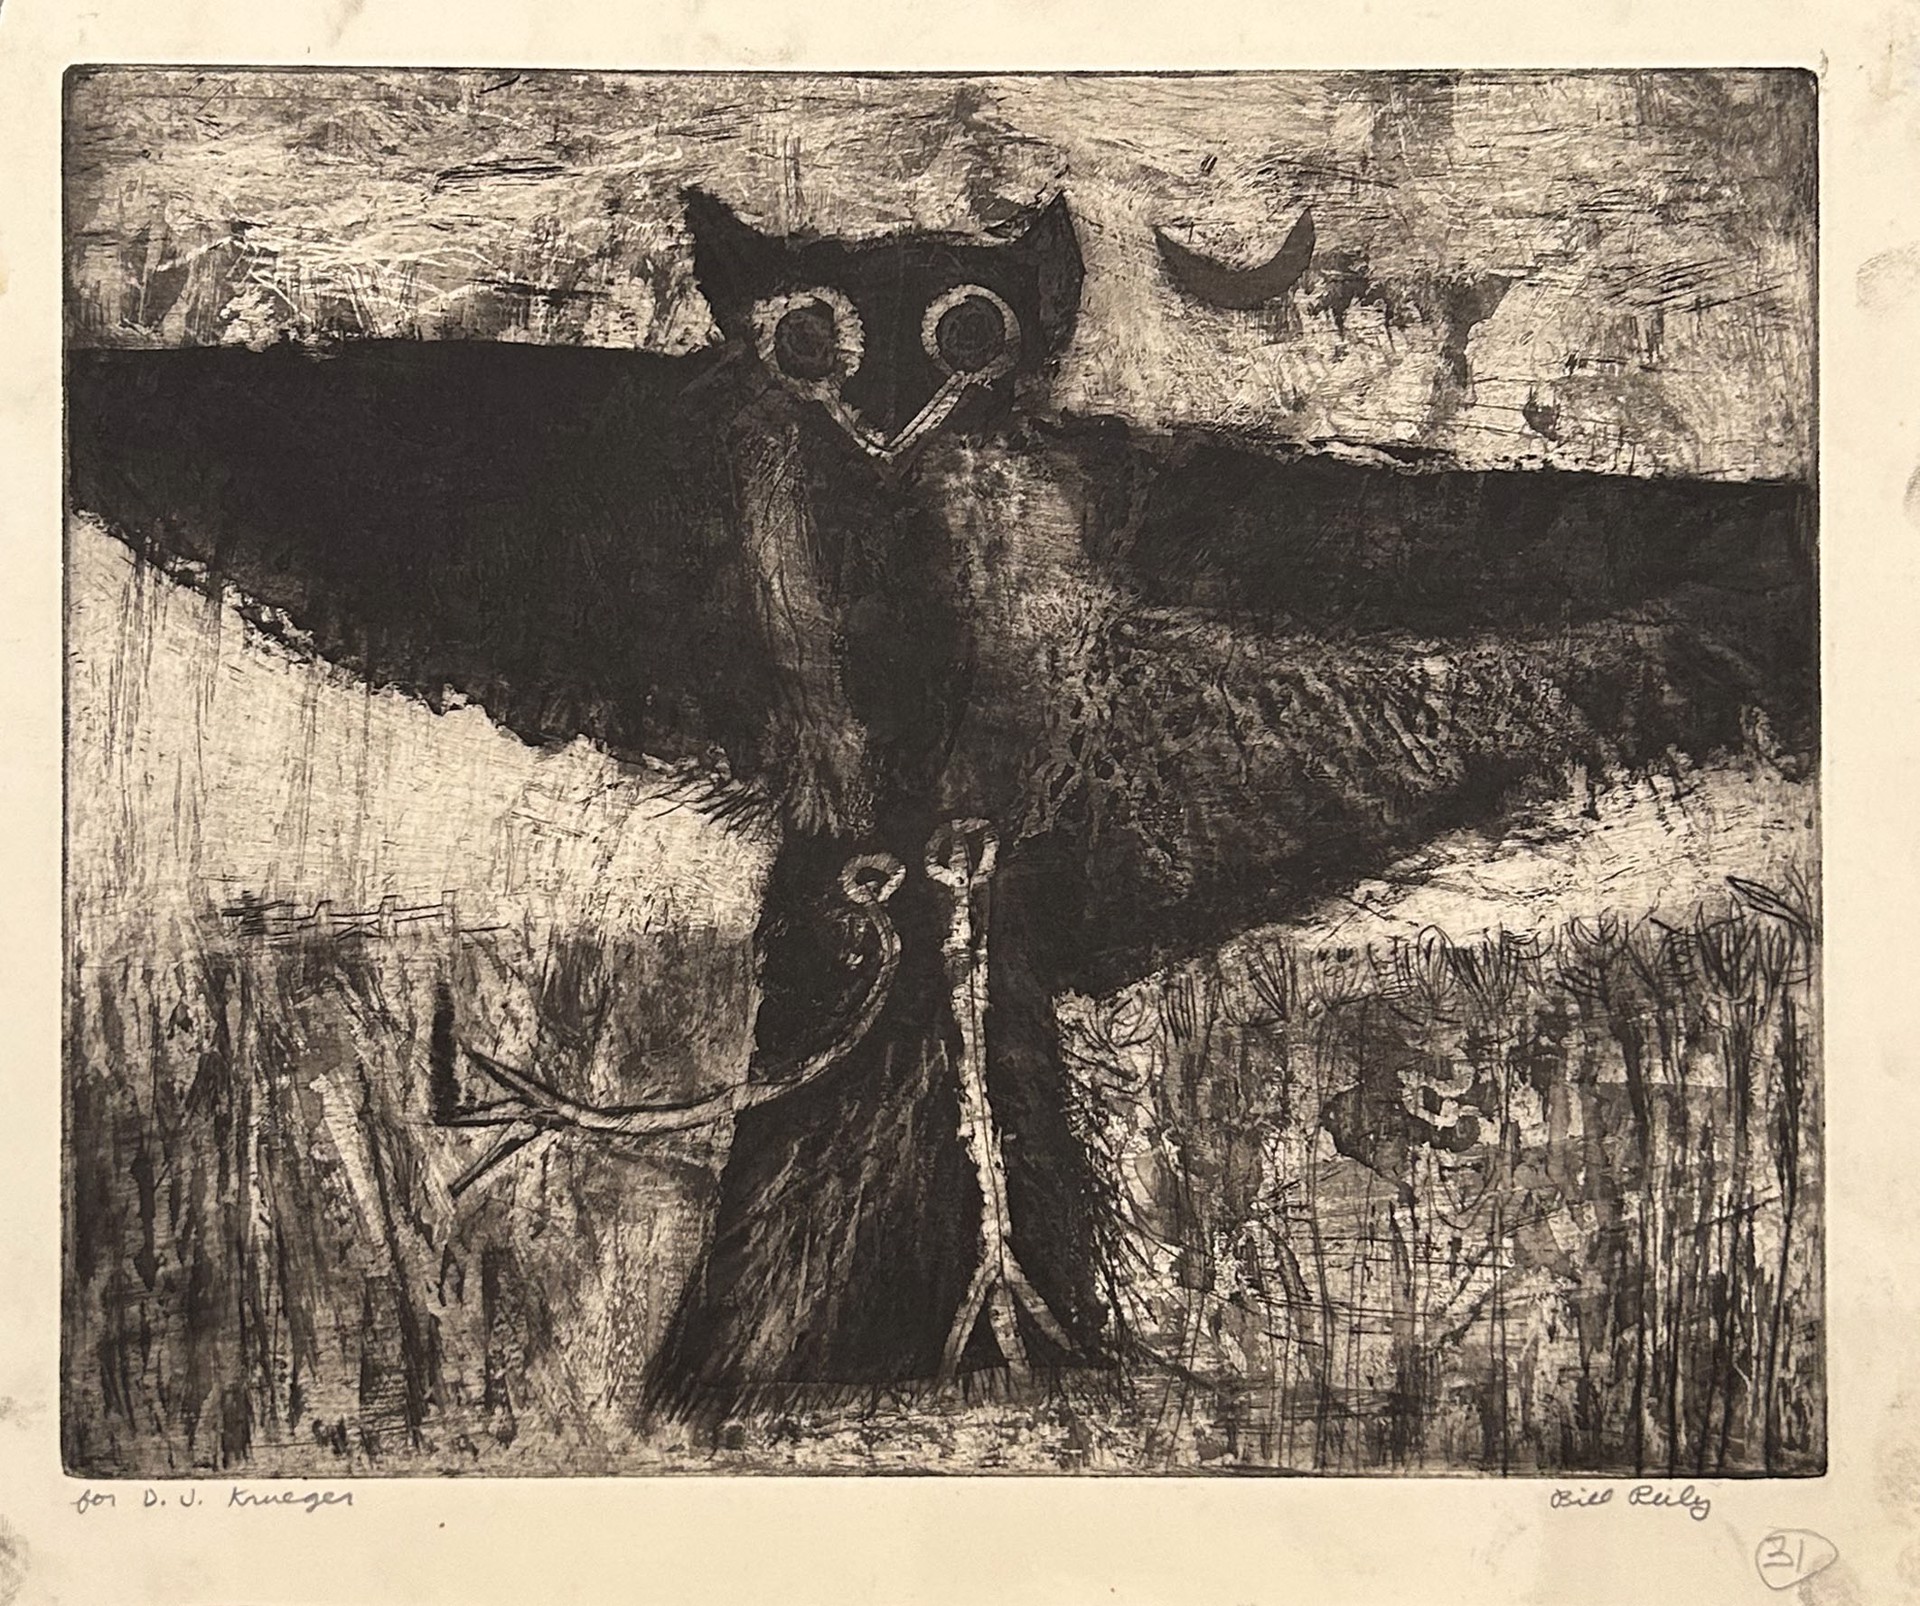 31a. Owl (for D.J. Krueger) by Bill Reily Prints